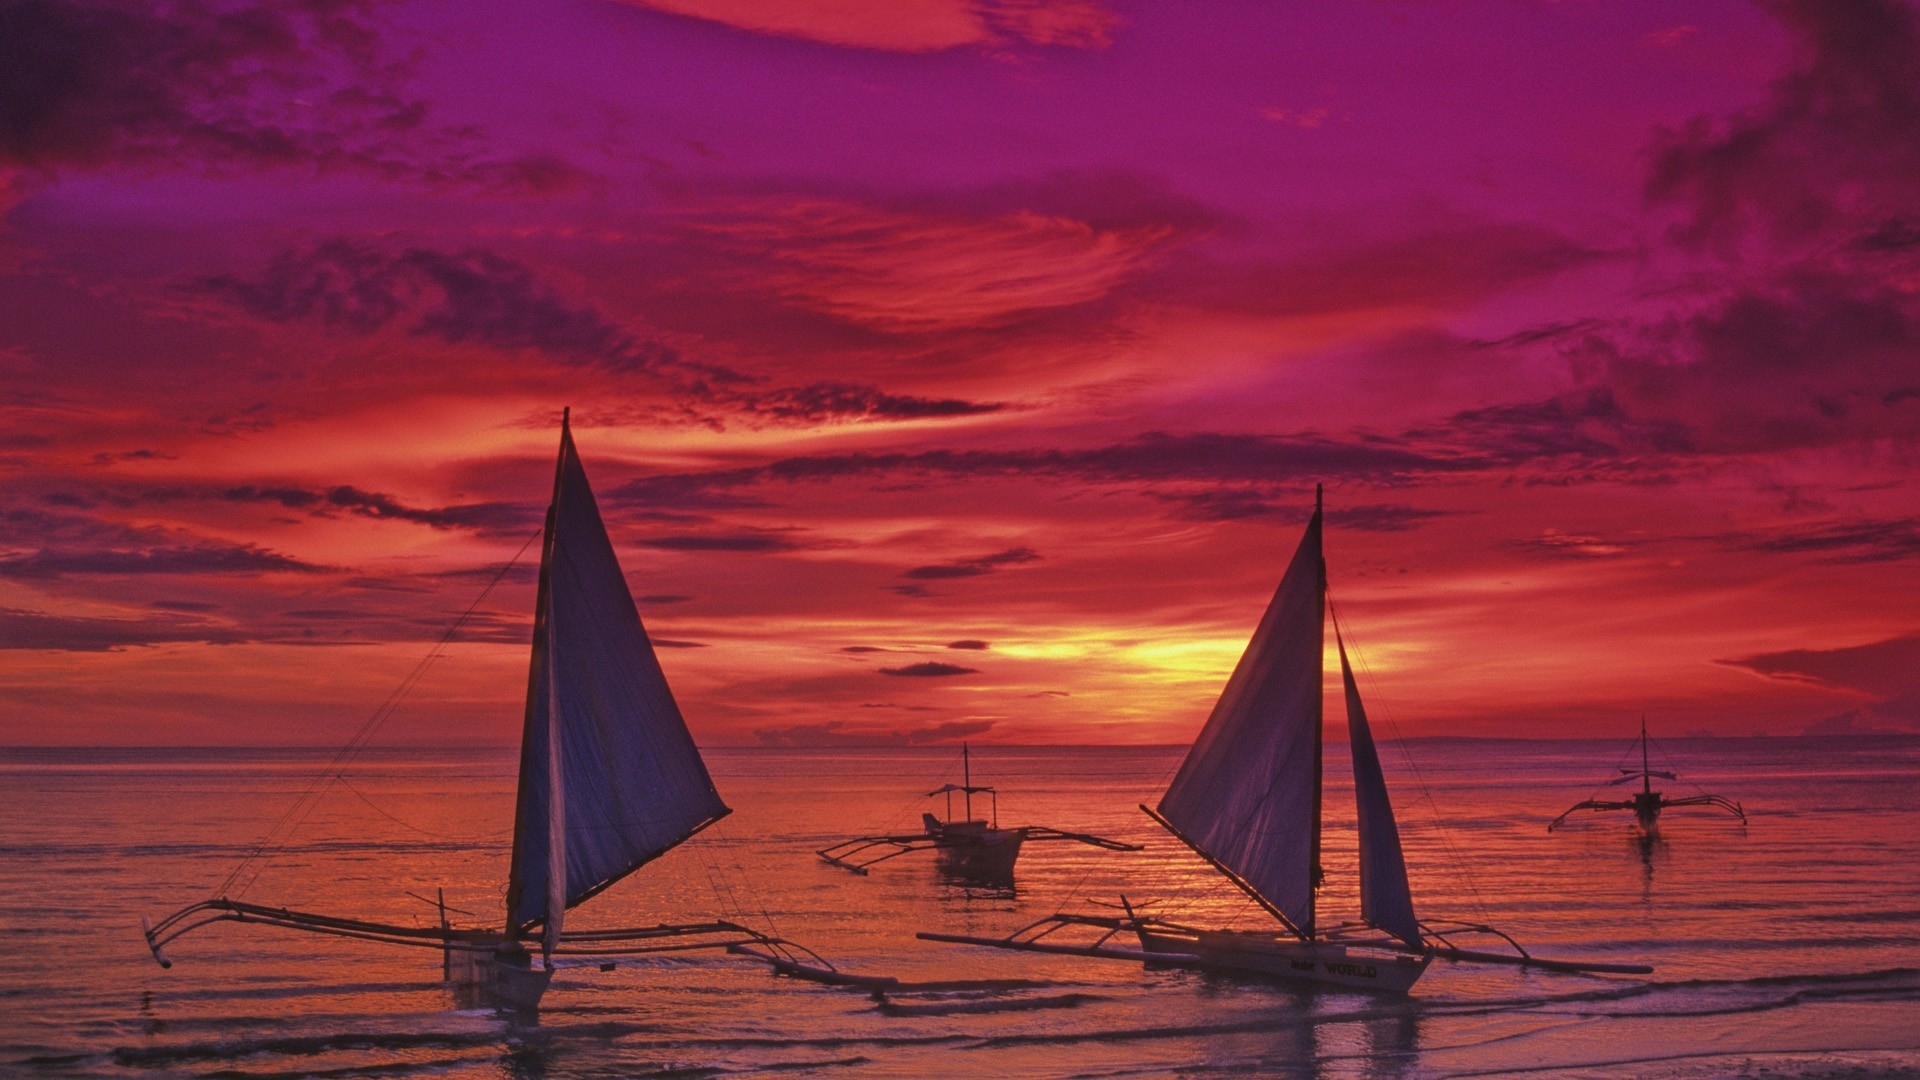 38 Sailboats At Sunrise Wallpaper Wallpapersafari 